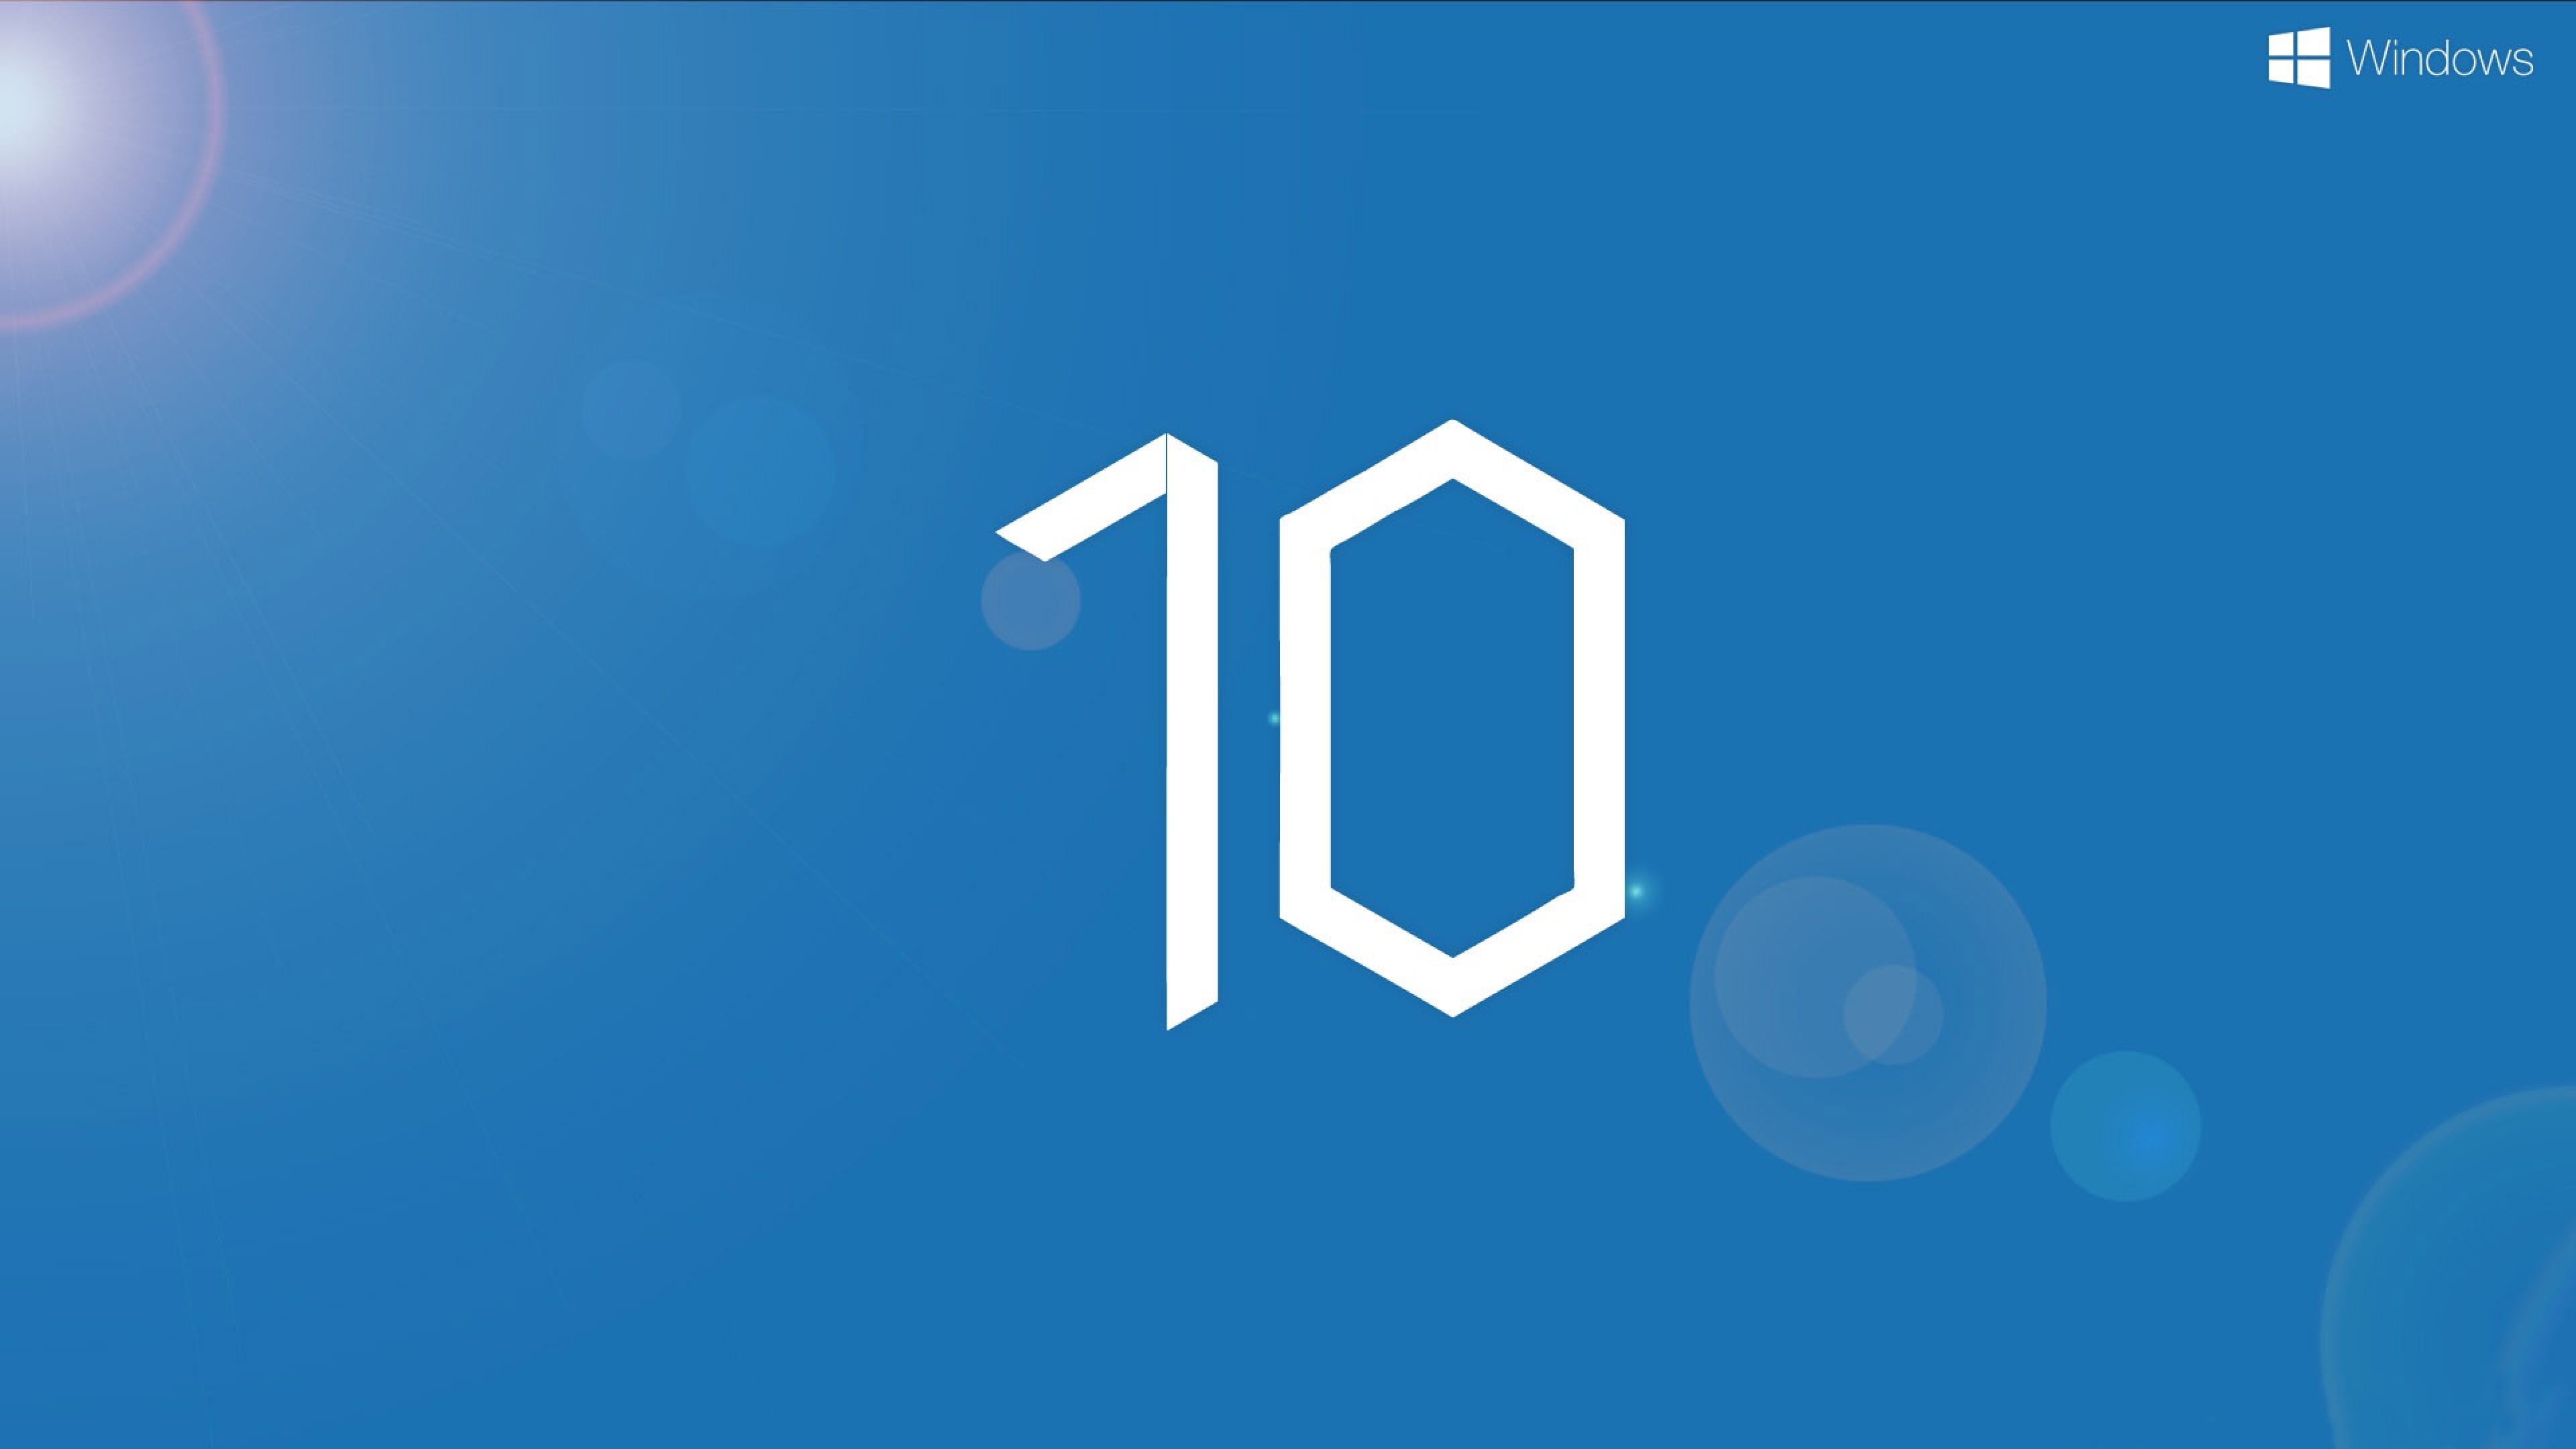 Windows 10 4K Wallpapers  Ultra HD Top 15  AxeeTech